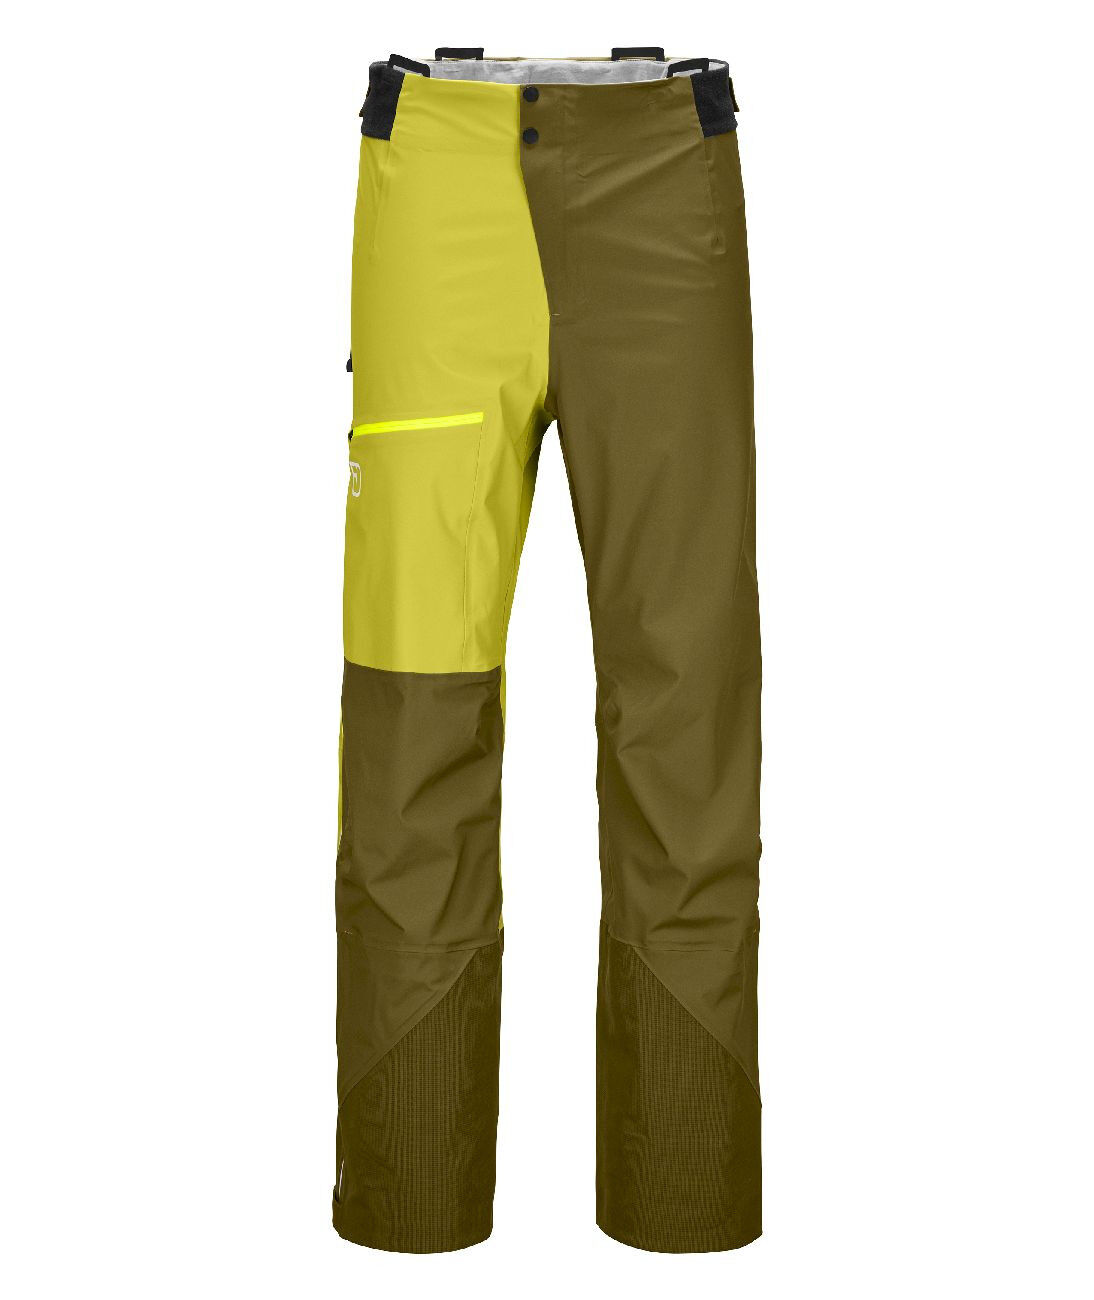 Ortovox 3L Ortler Pants - Pantalón impermeable - Hombre